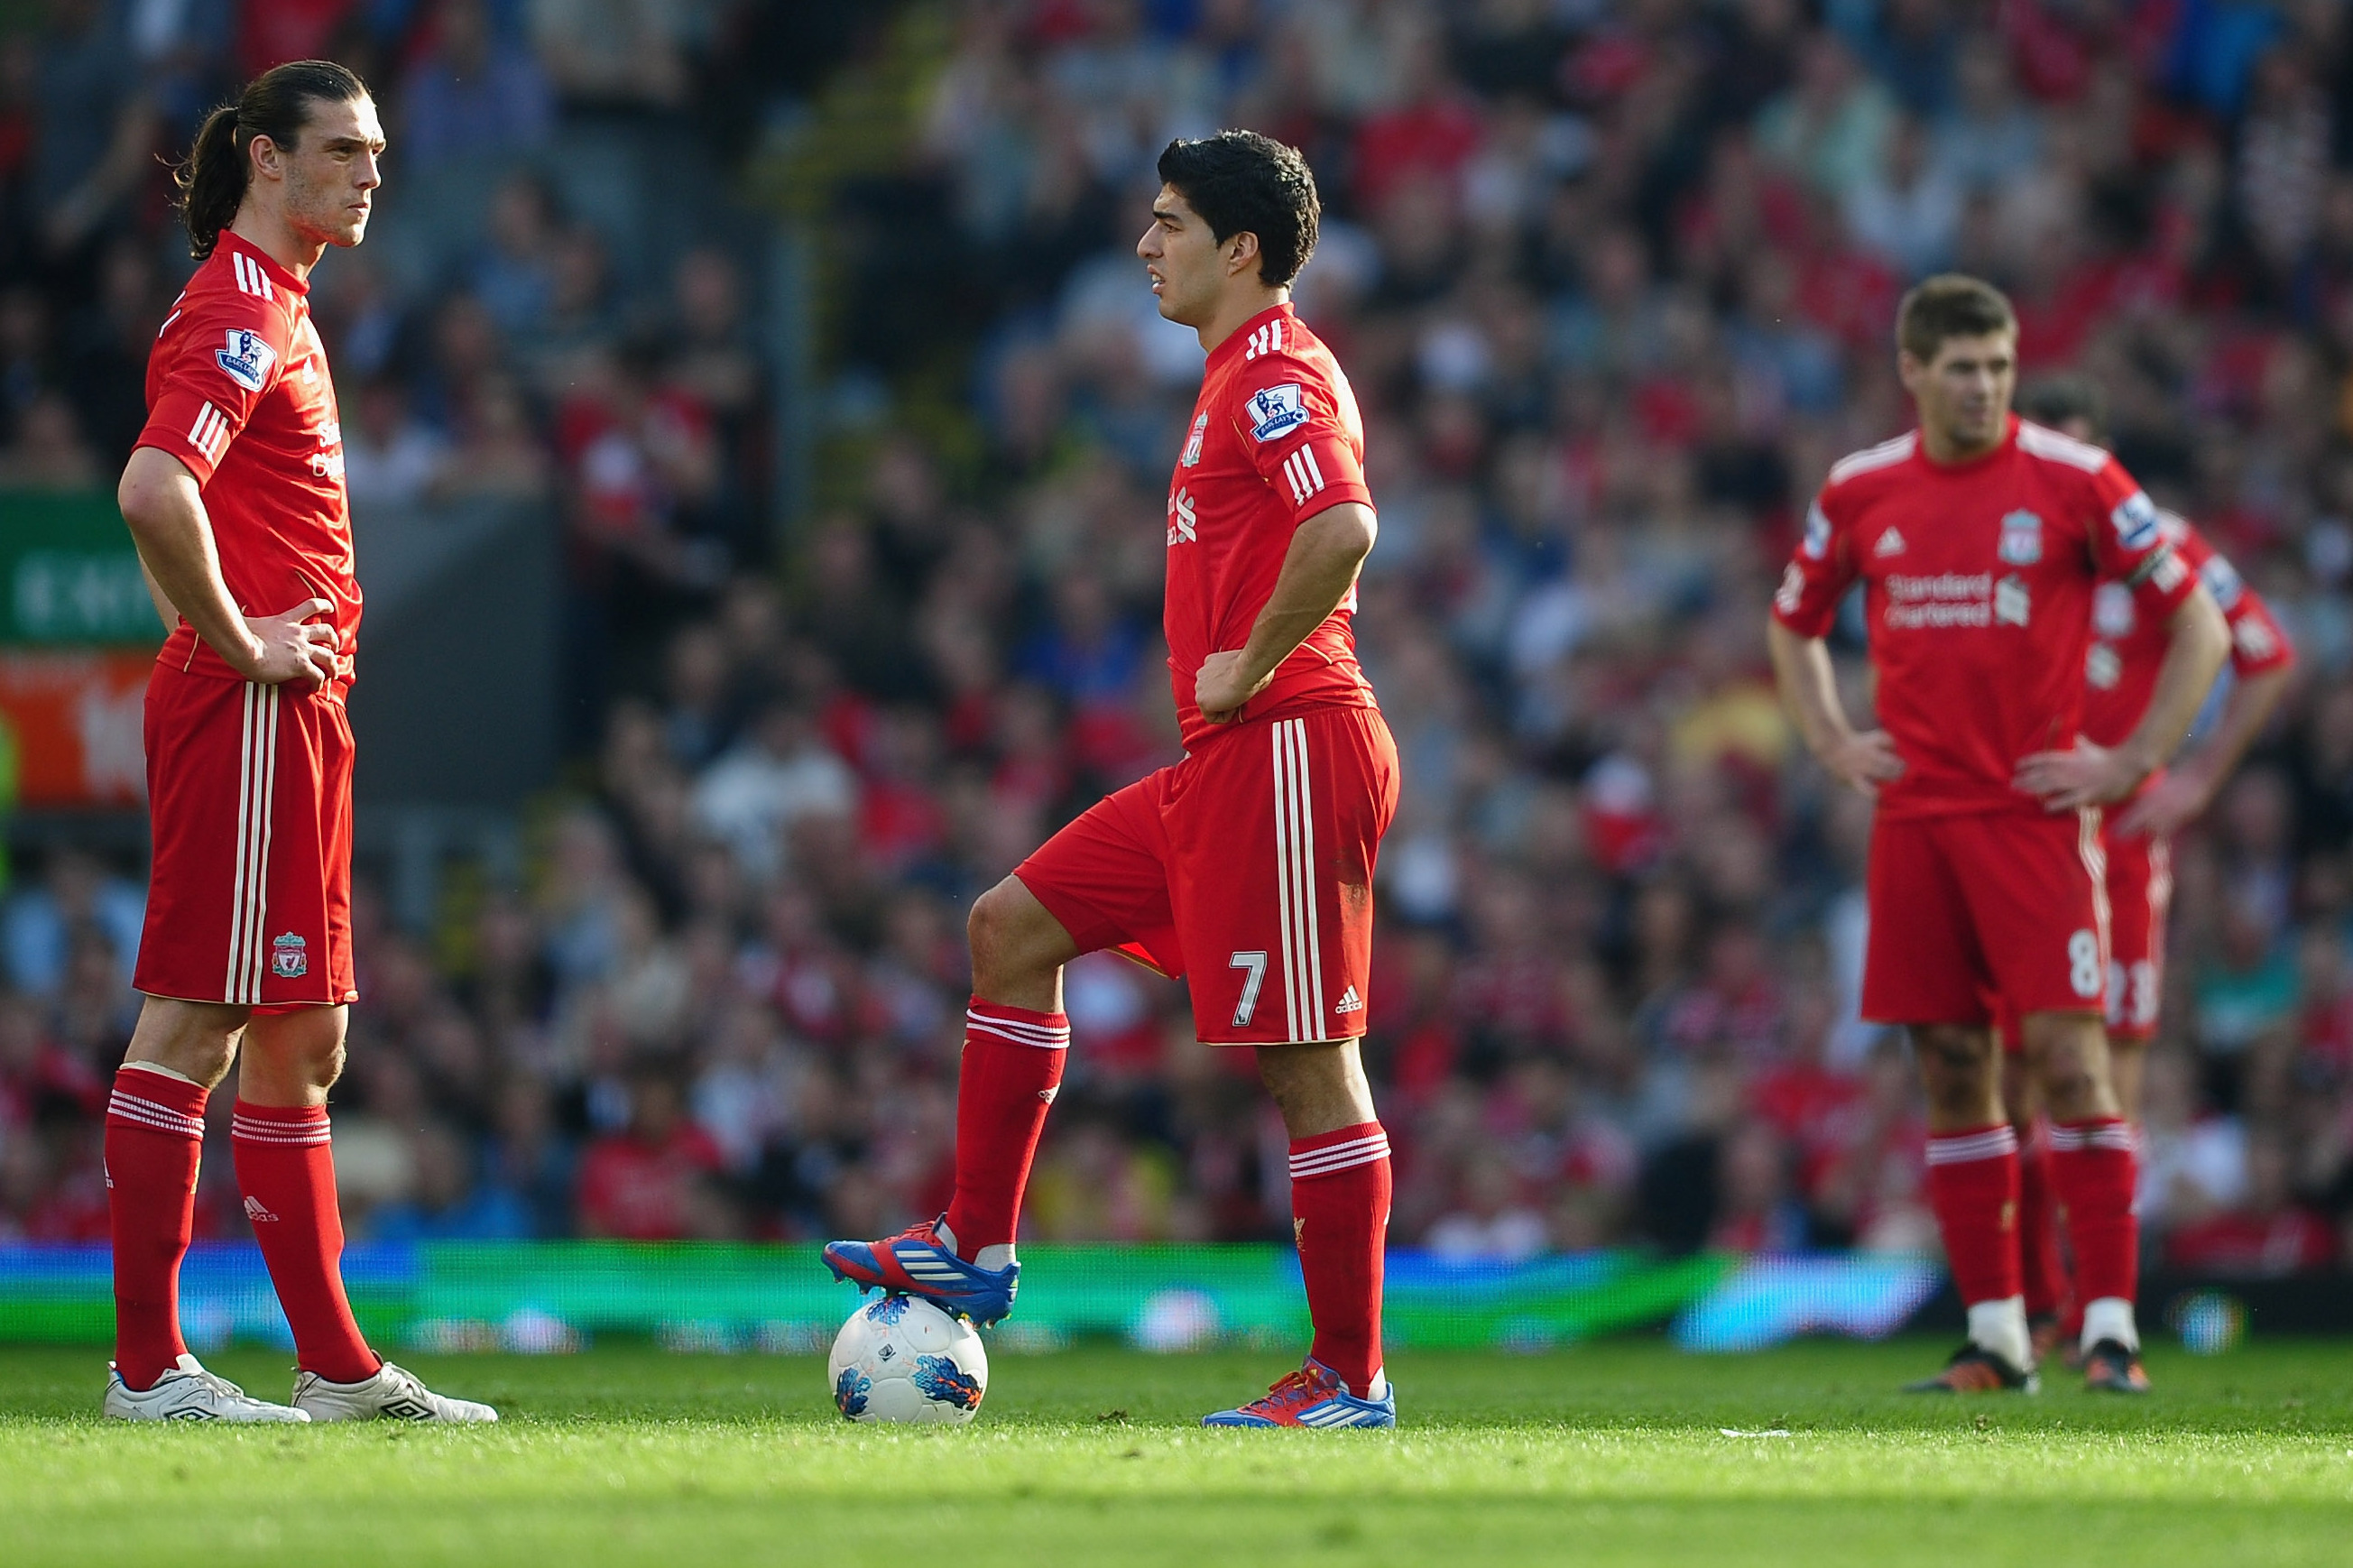 Liverpool: Review of 2012/13 Premier League season, Football, Sport